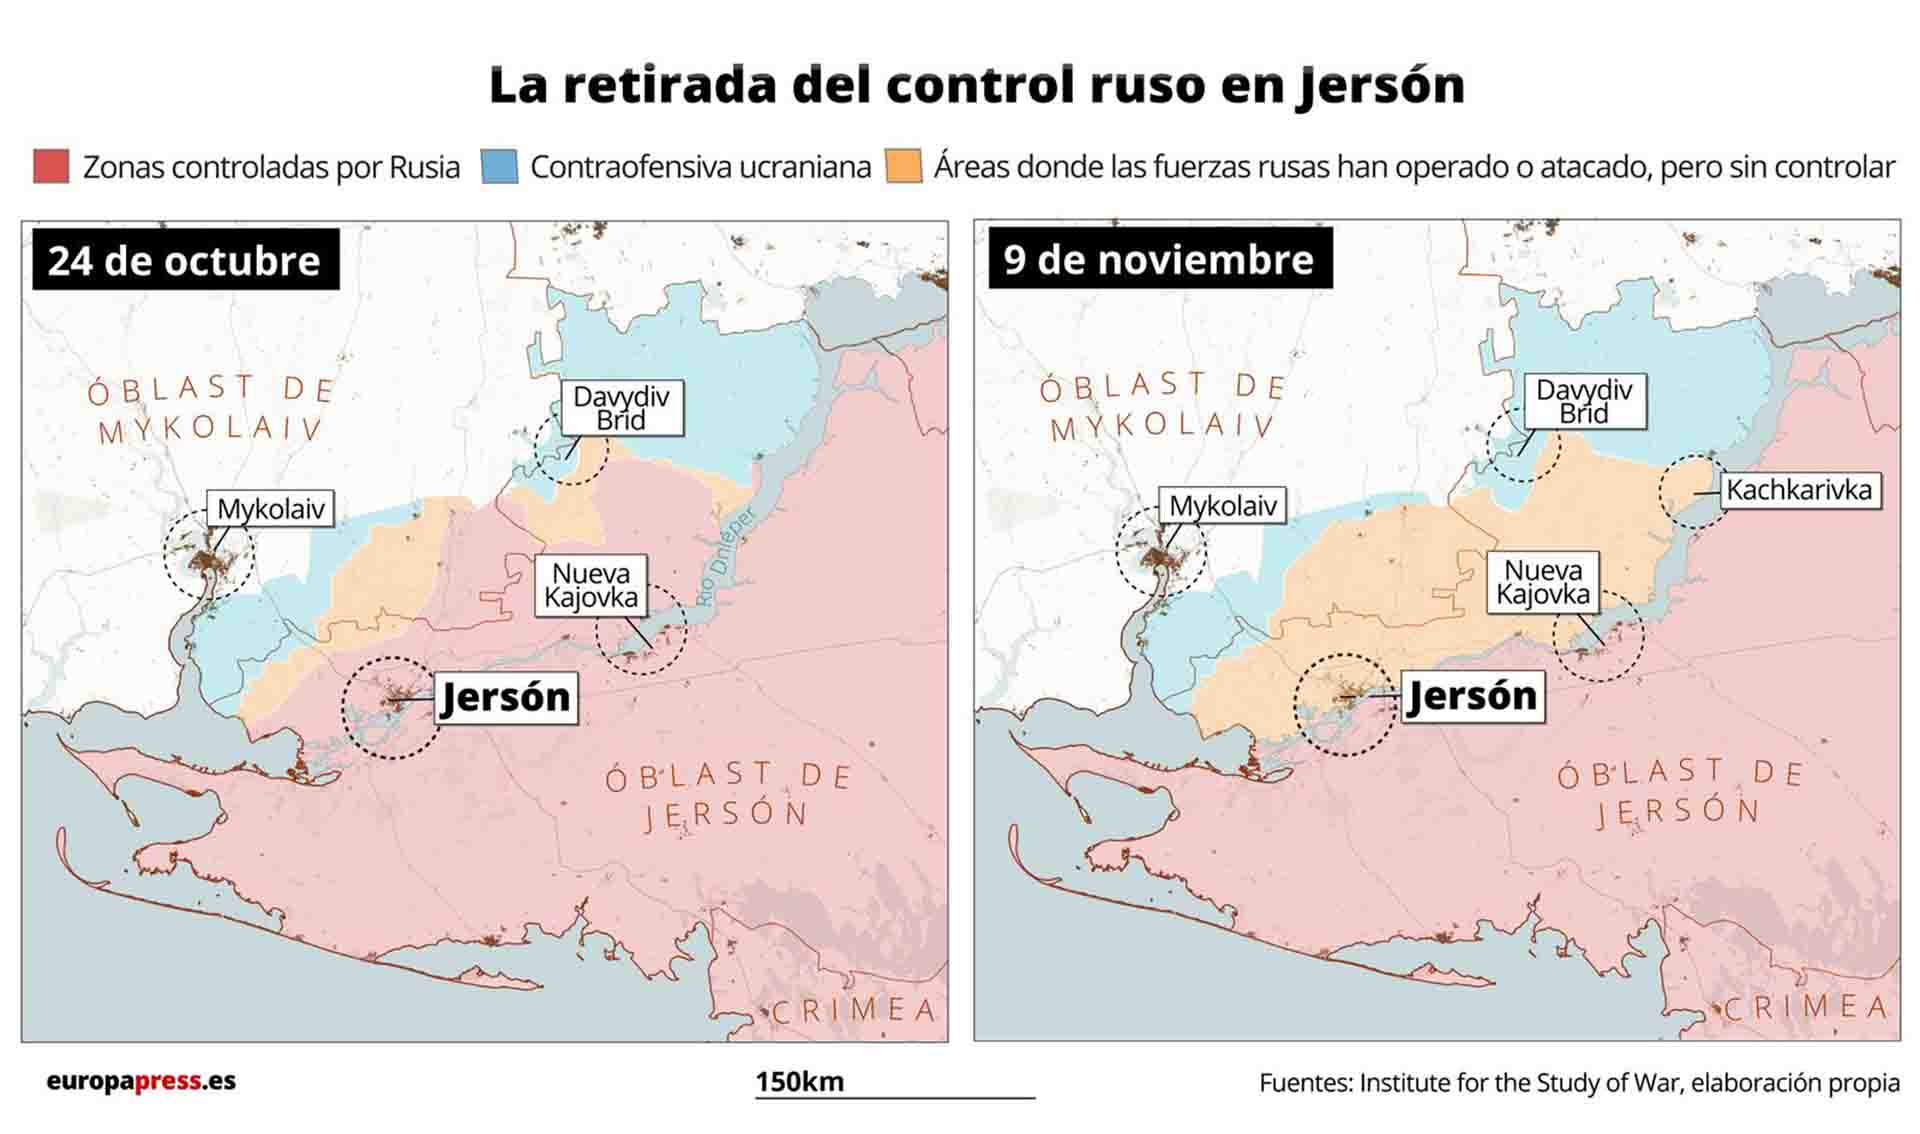 Mapa de la retirada del contron ruso en Jersón, Ucrania / Mapa: EP